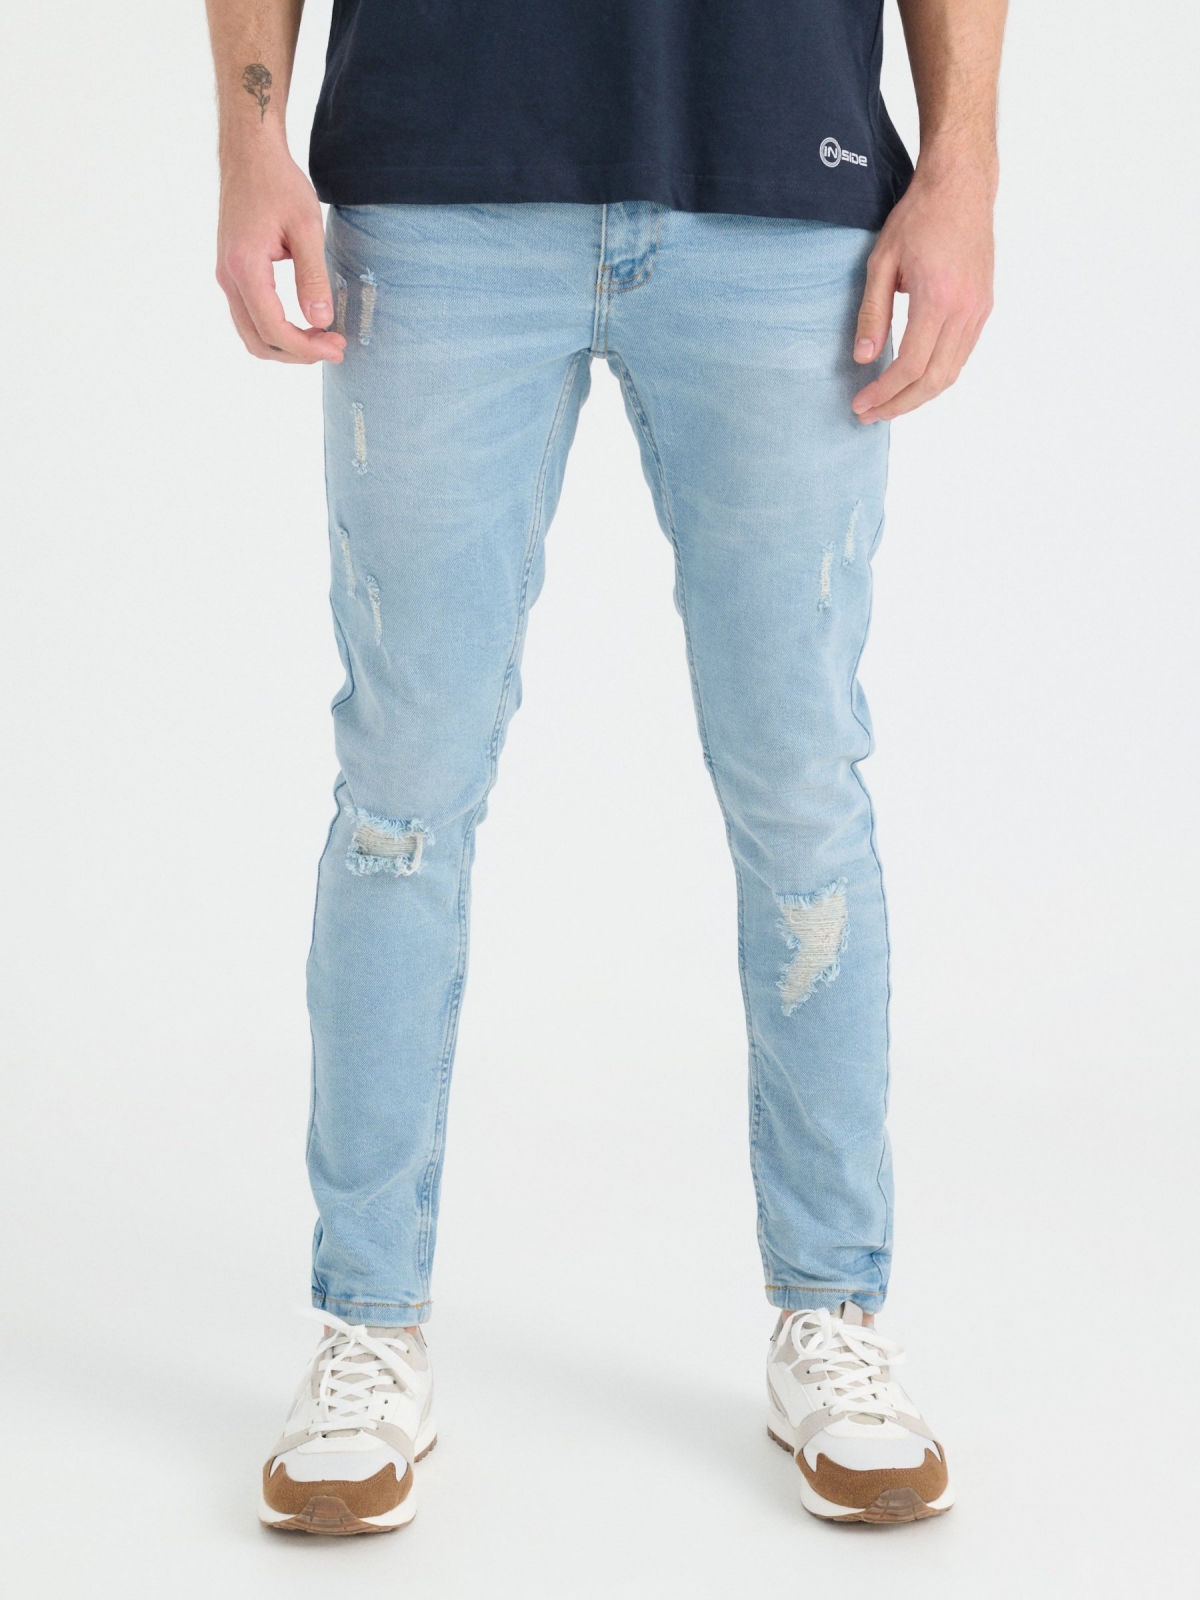 Jeans super slim lavado rotos azul claro vista media frontal